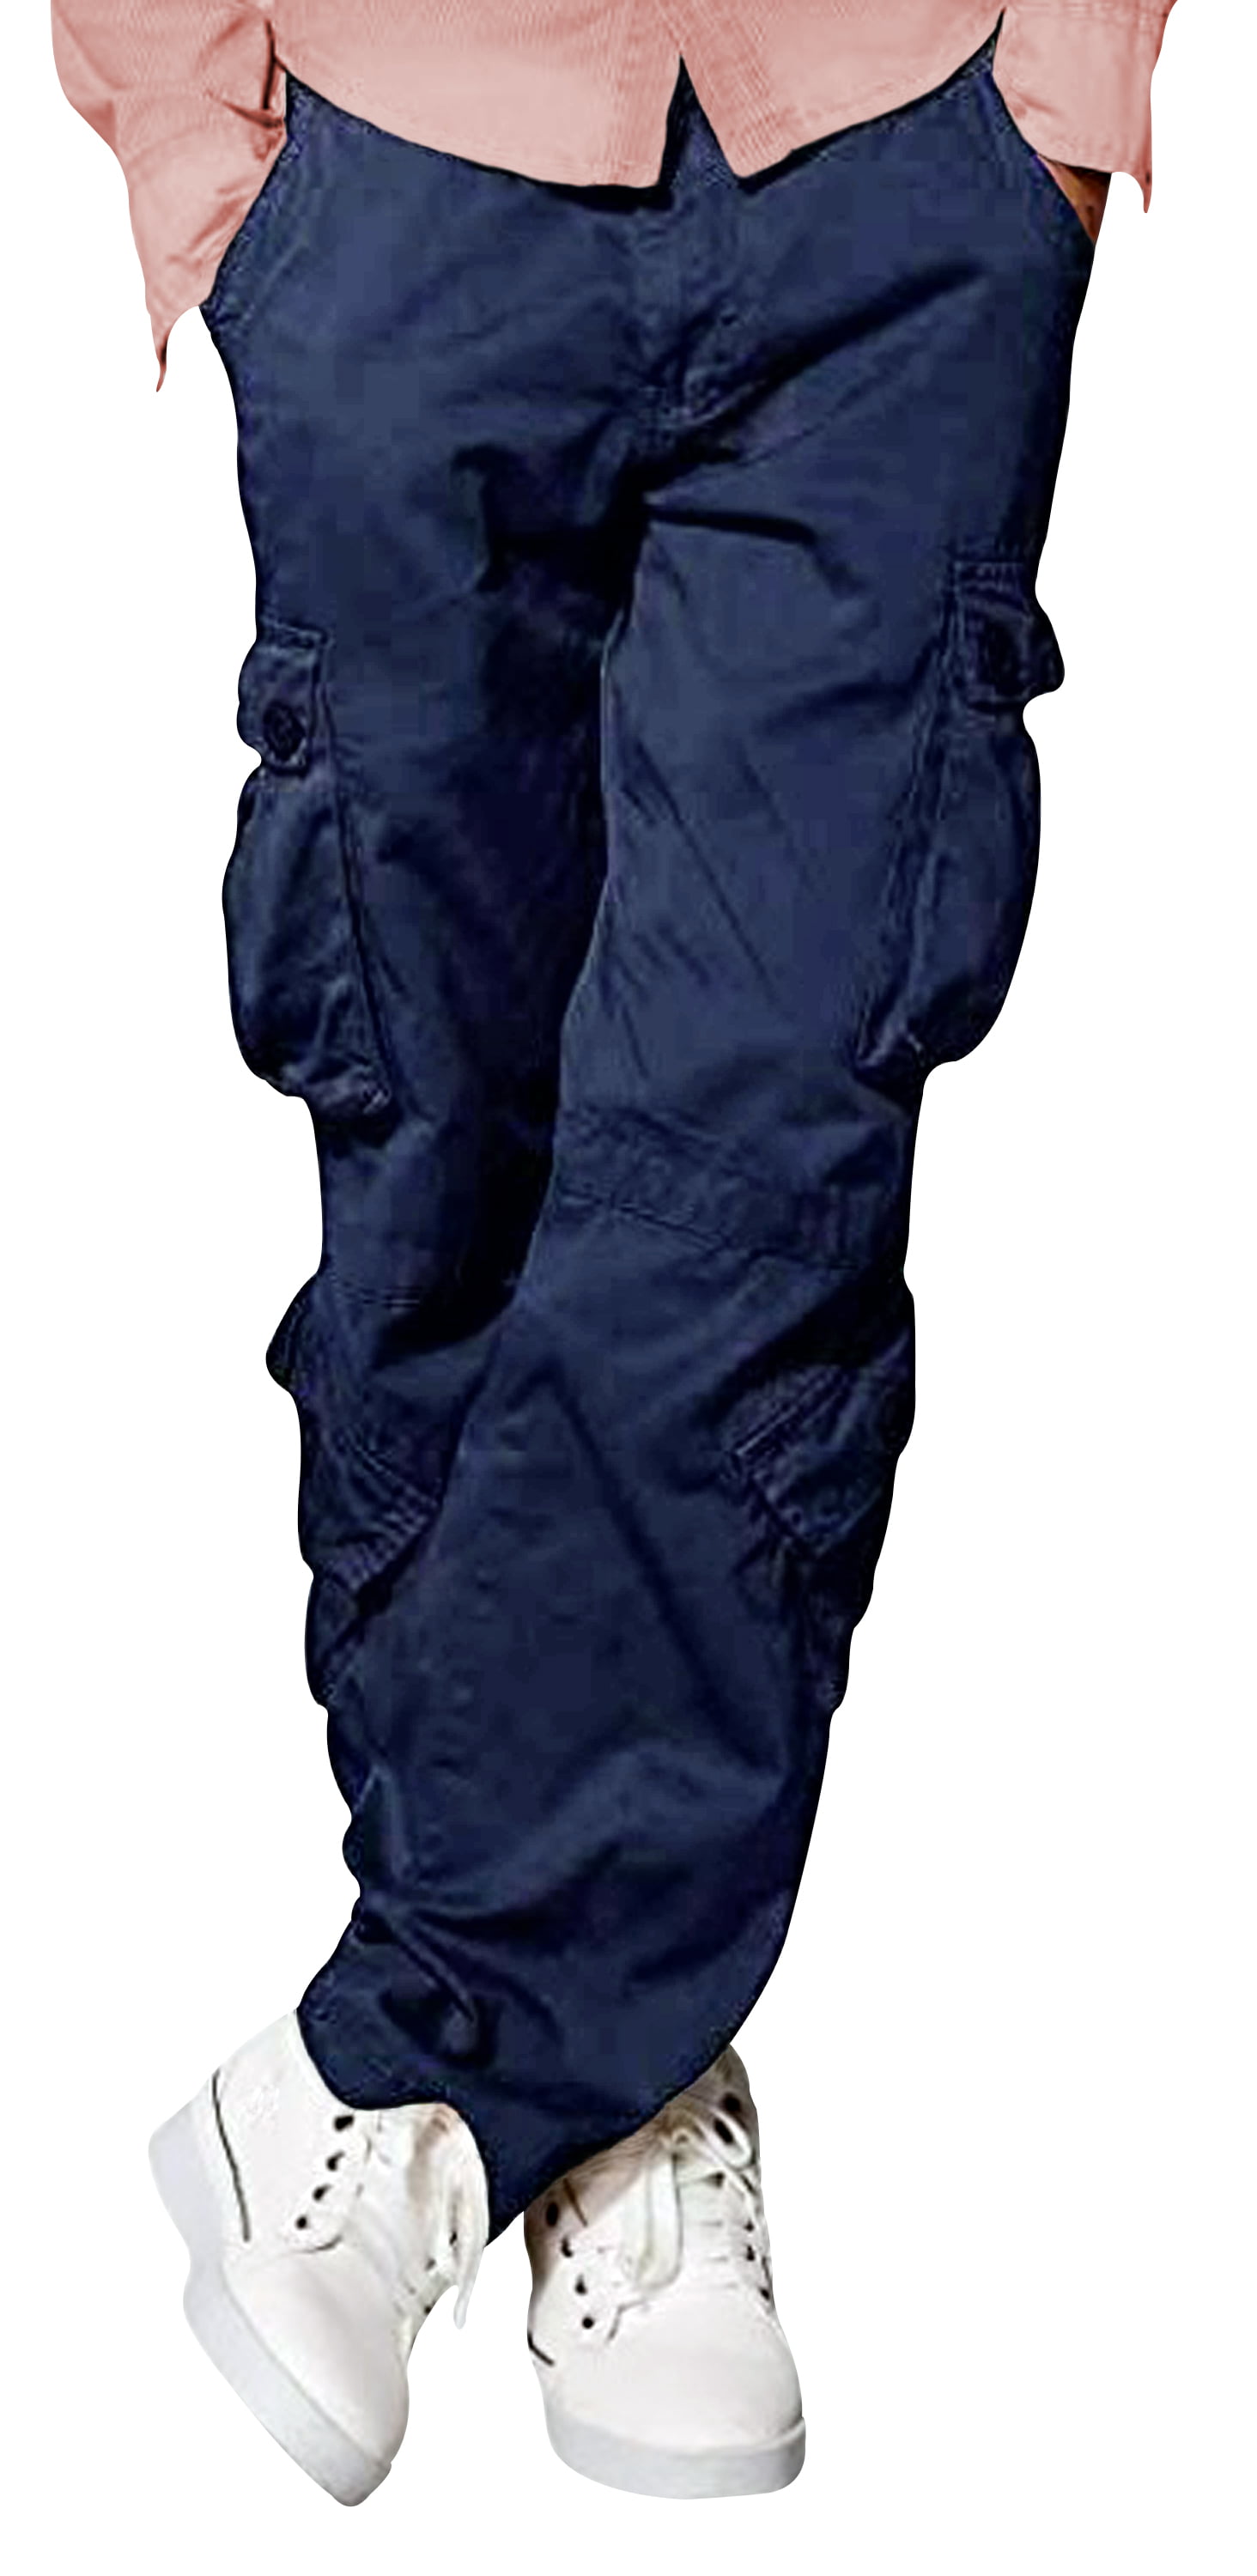 Men's Cargo Pants 100% Cotton Work Trousers Tactical Combat Outdoor Hiking Pant 